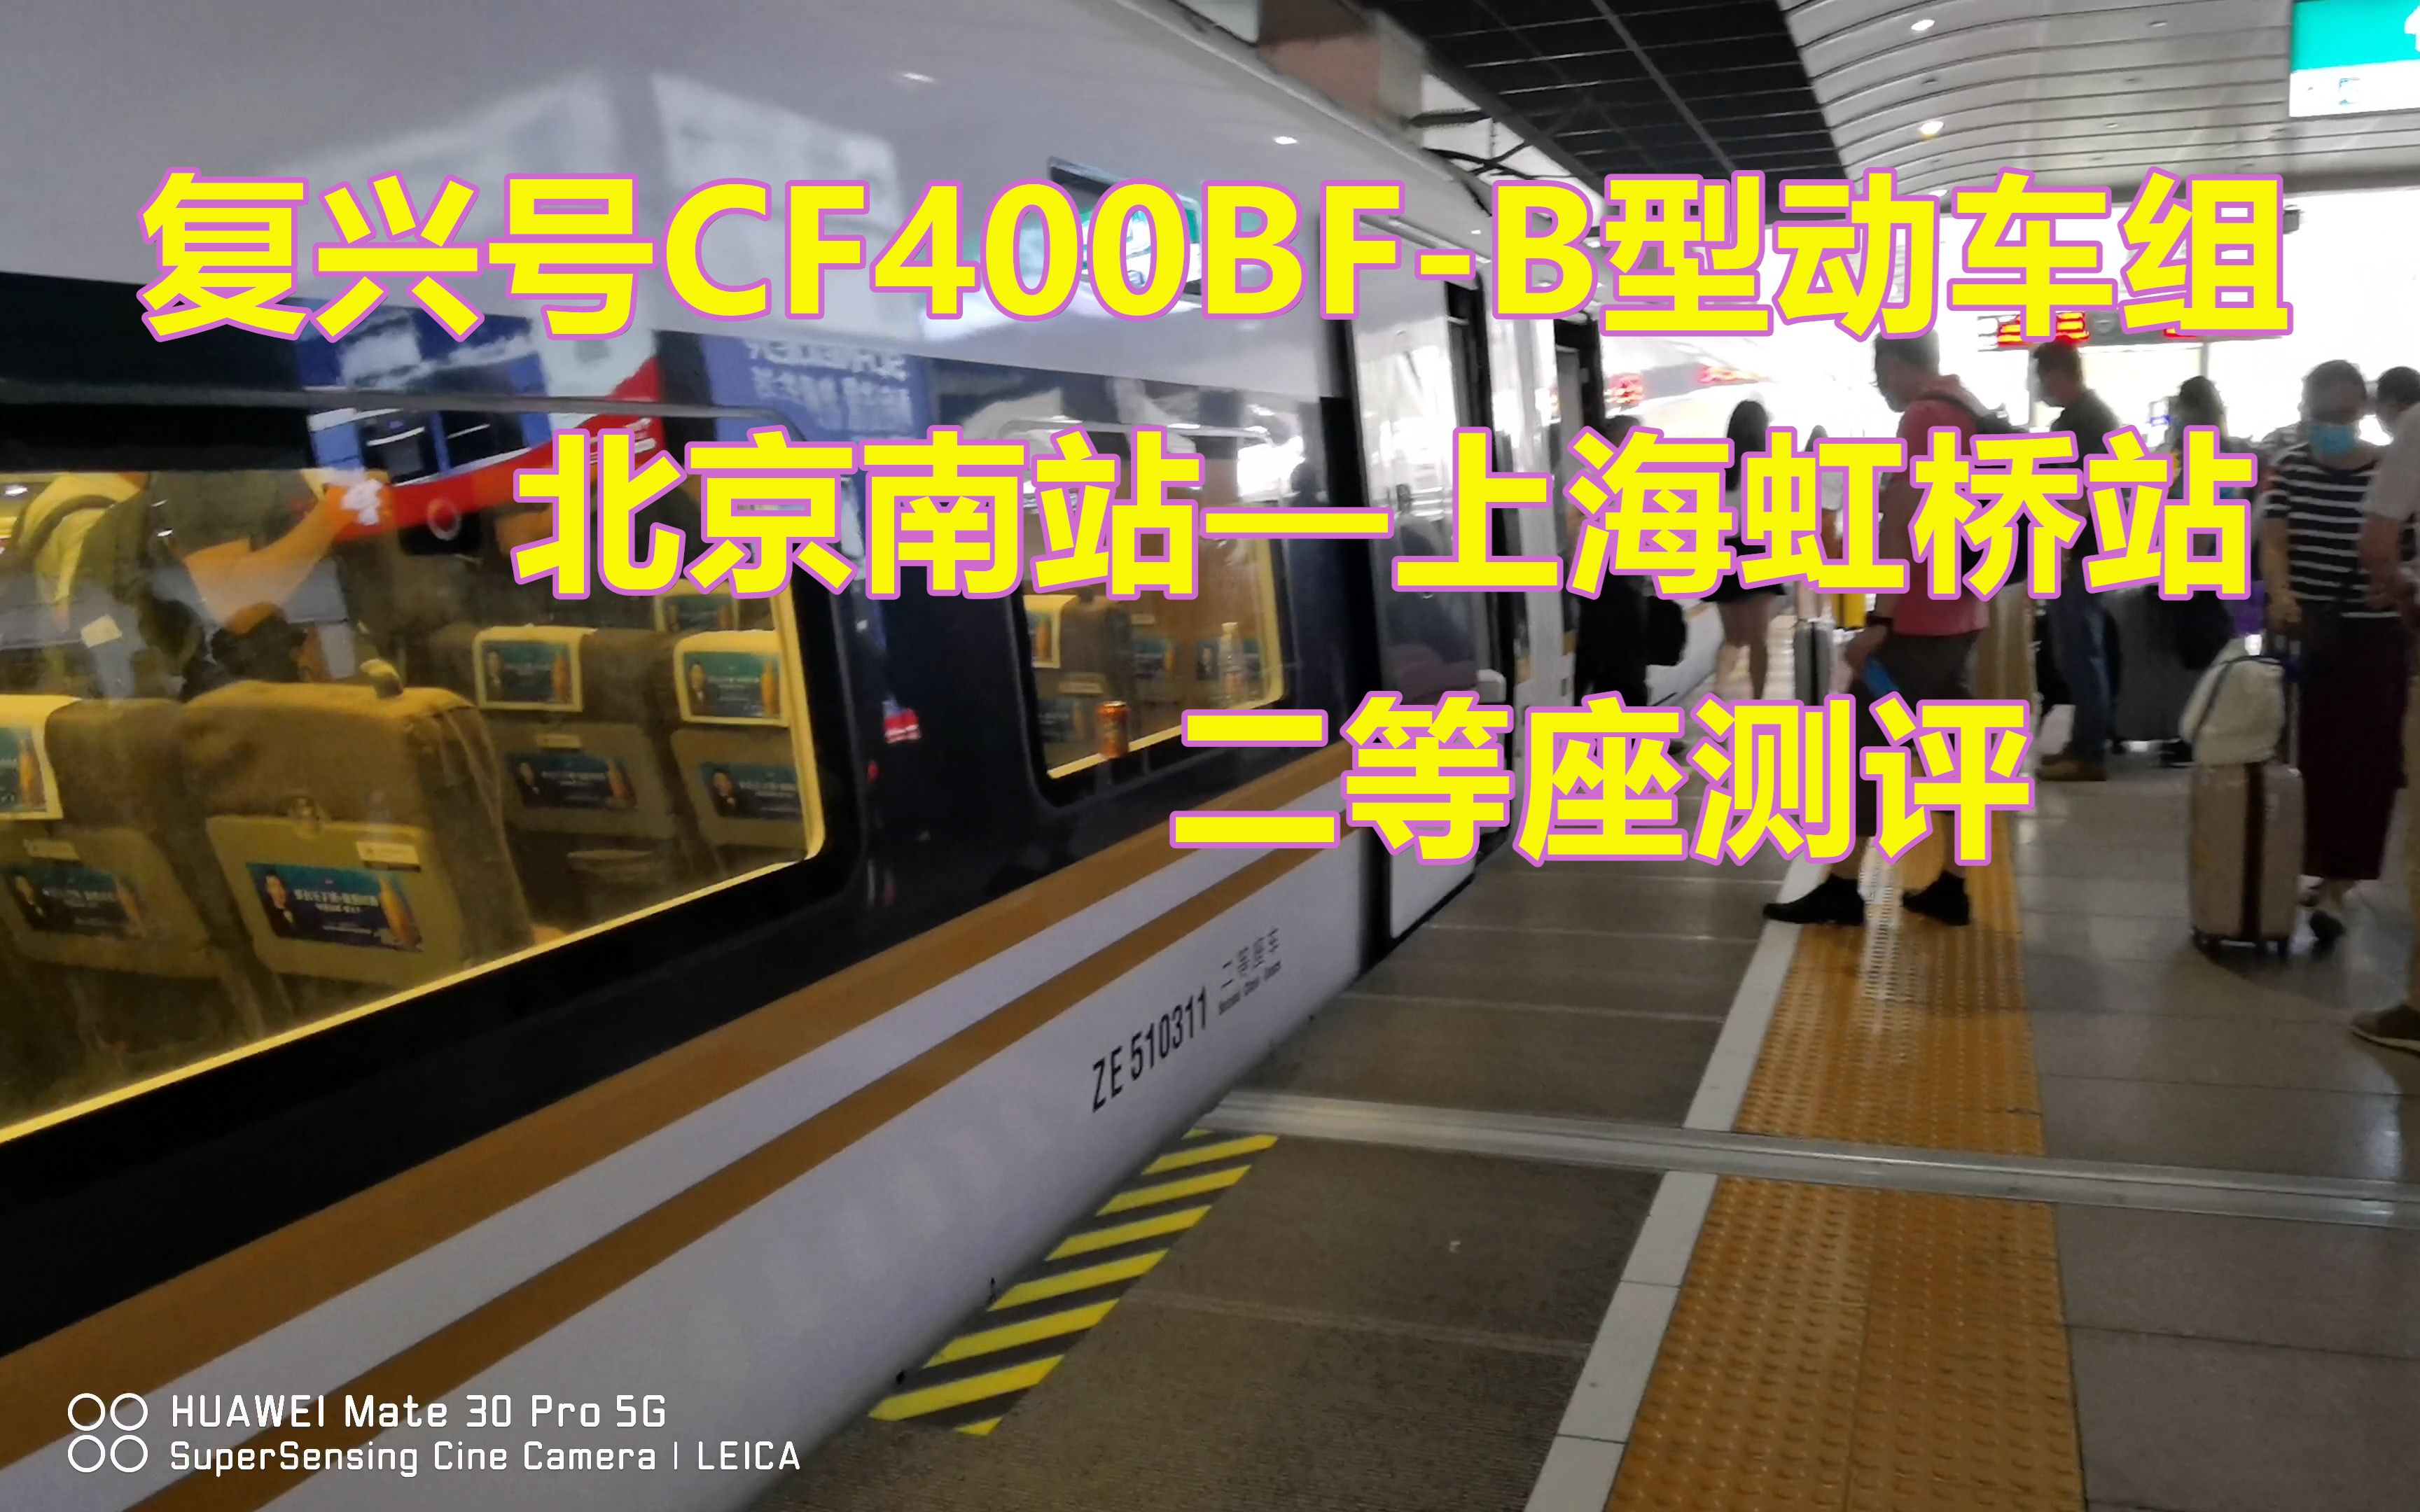 【G15 北京南站—上海虹桥站】复兴号CR400BF-B型高铁二等座测评